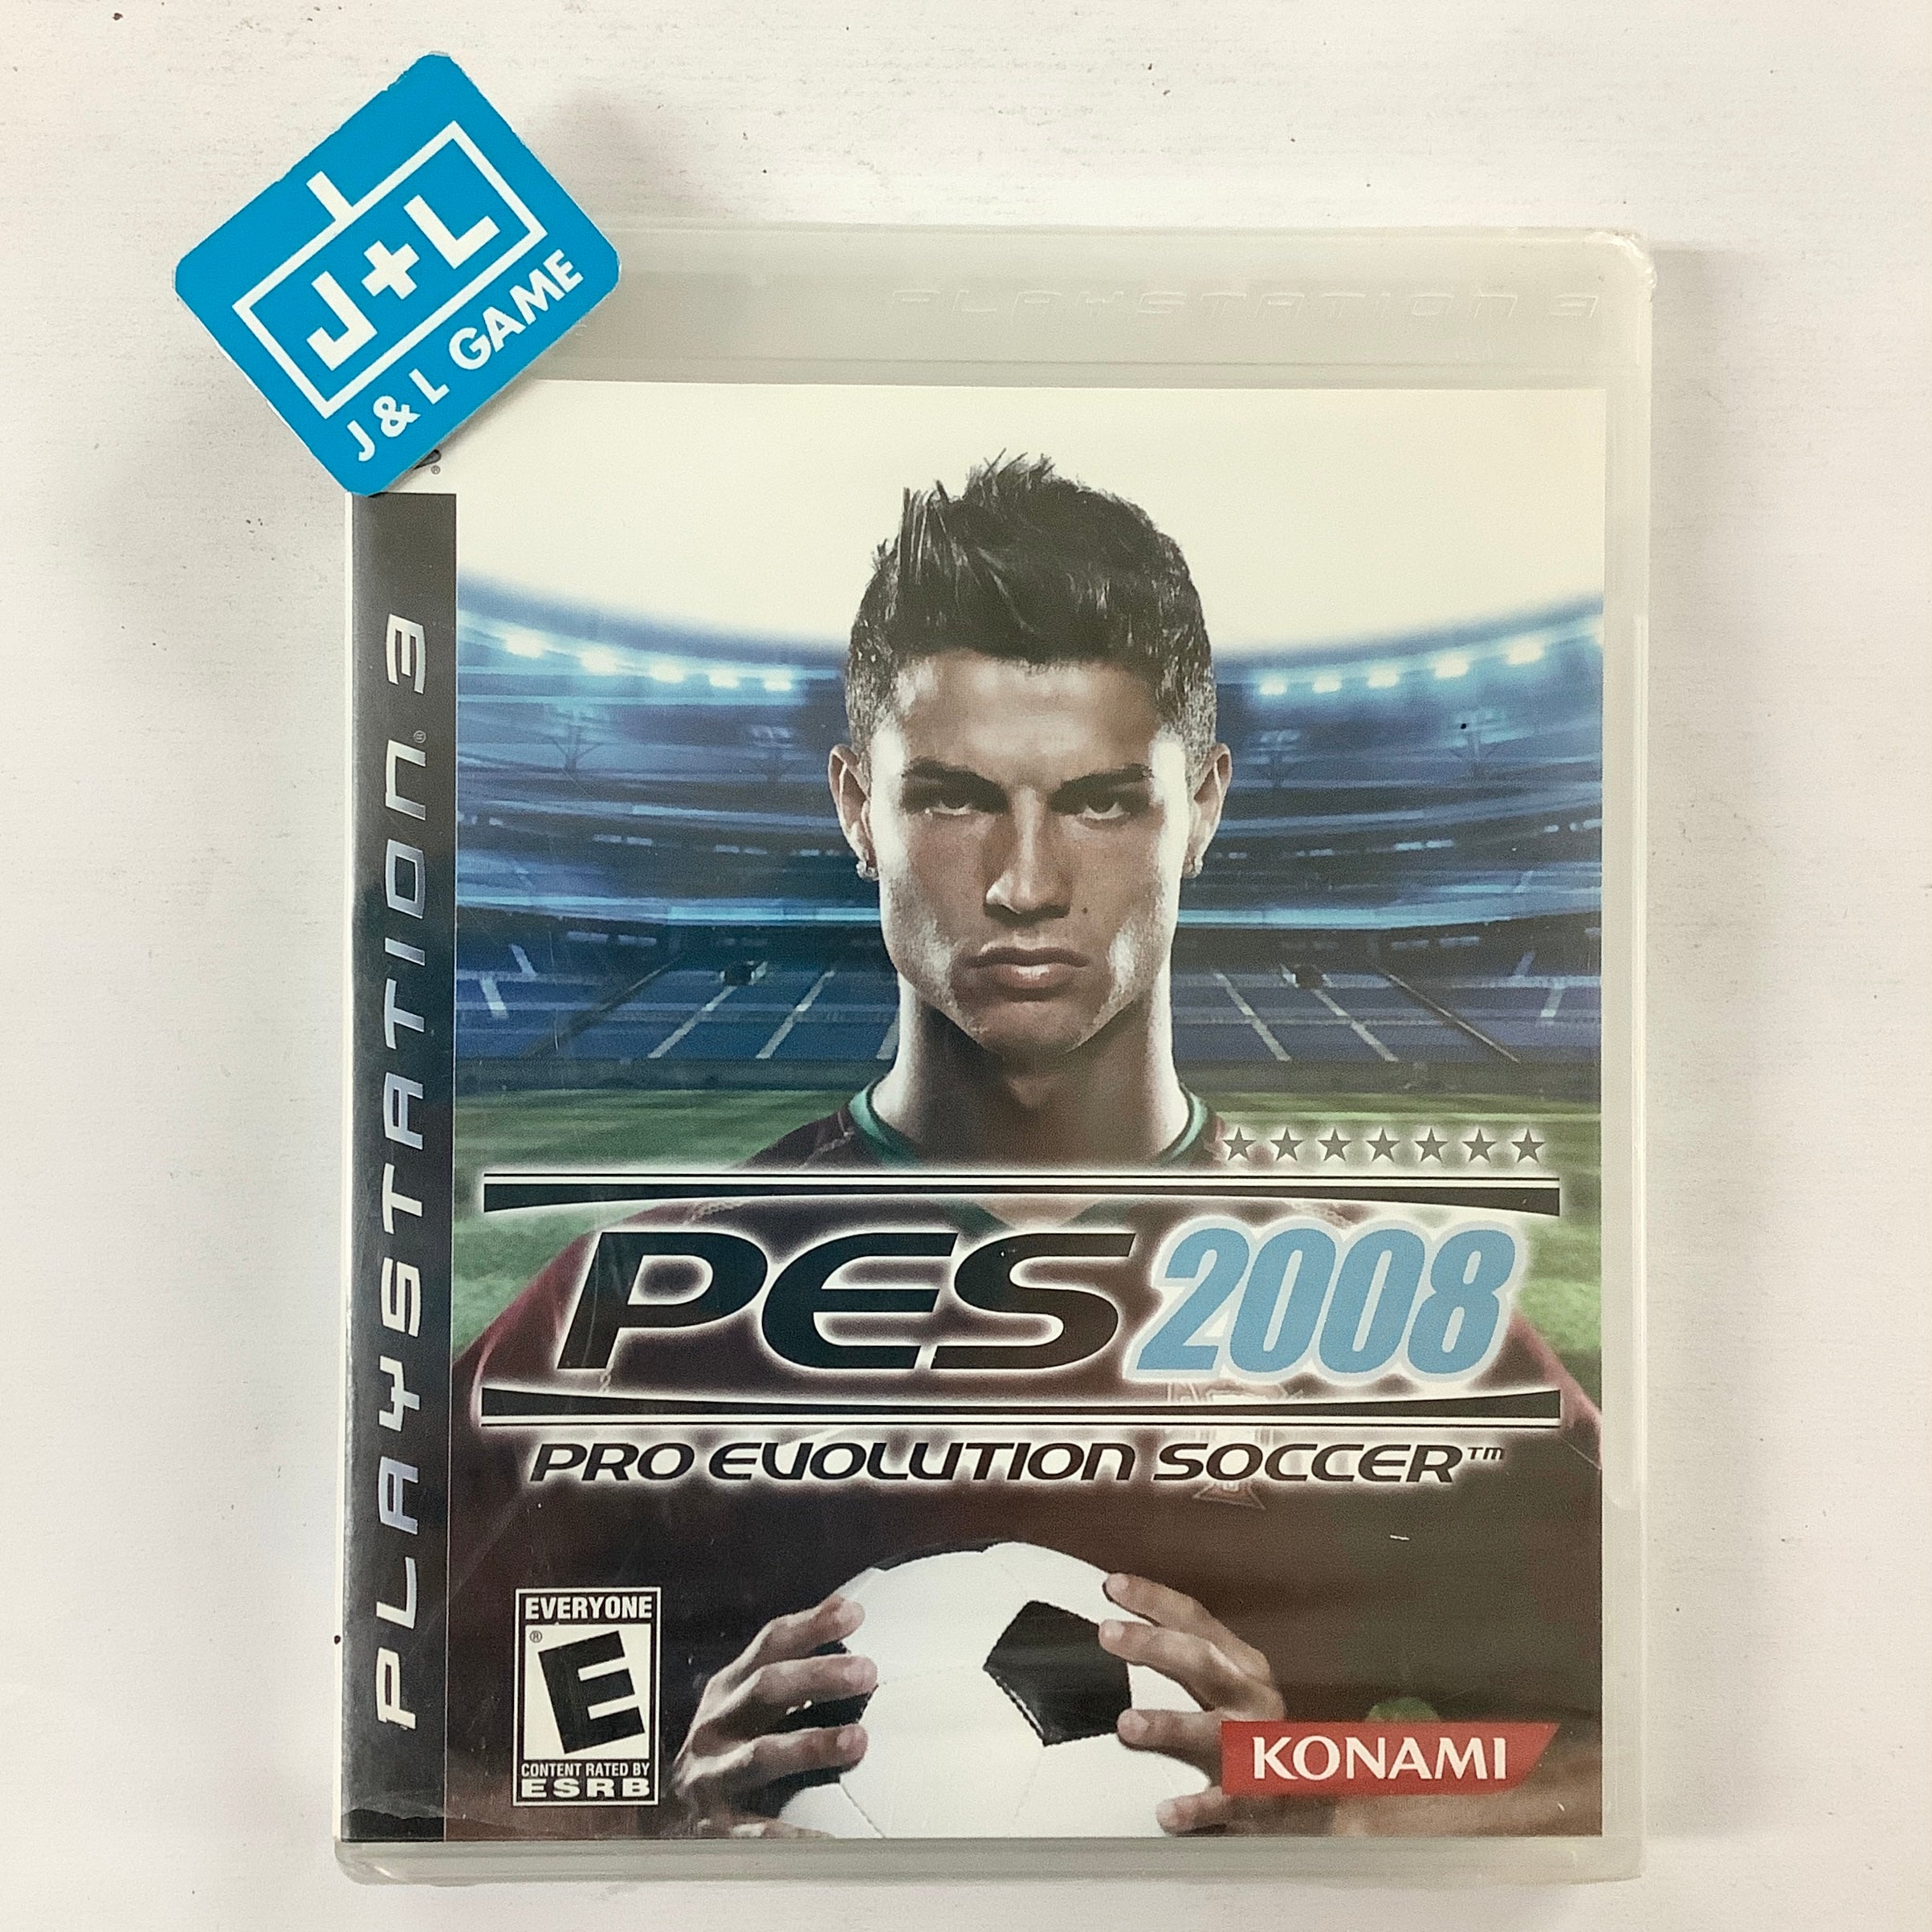 Pro Evolution Soccer 2008 - (PS3) PlayStation 3 Video Games Konami   